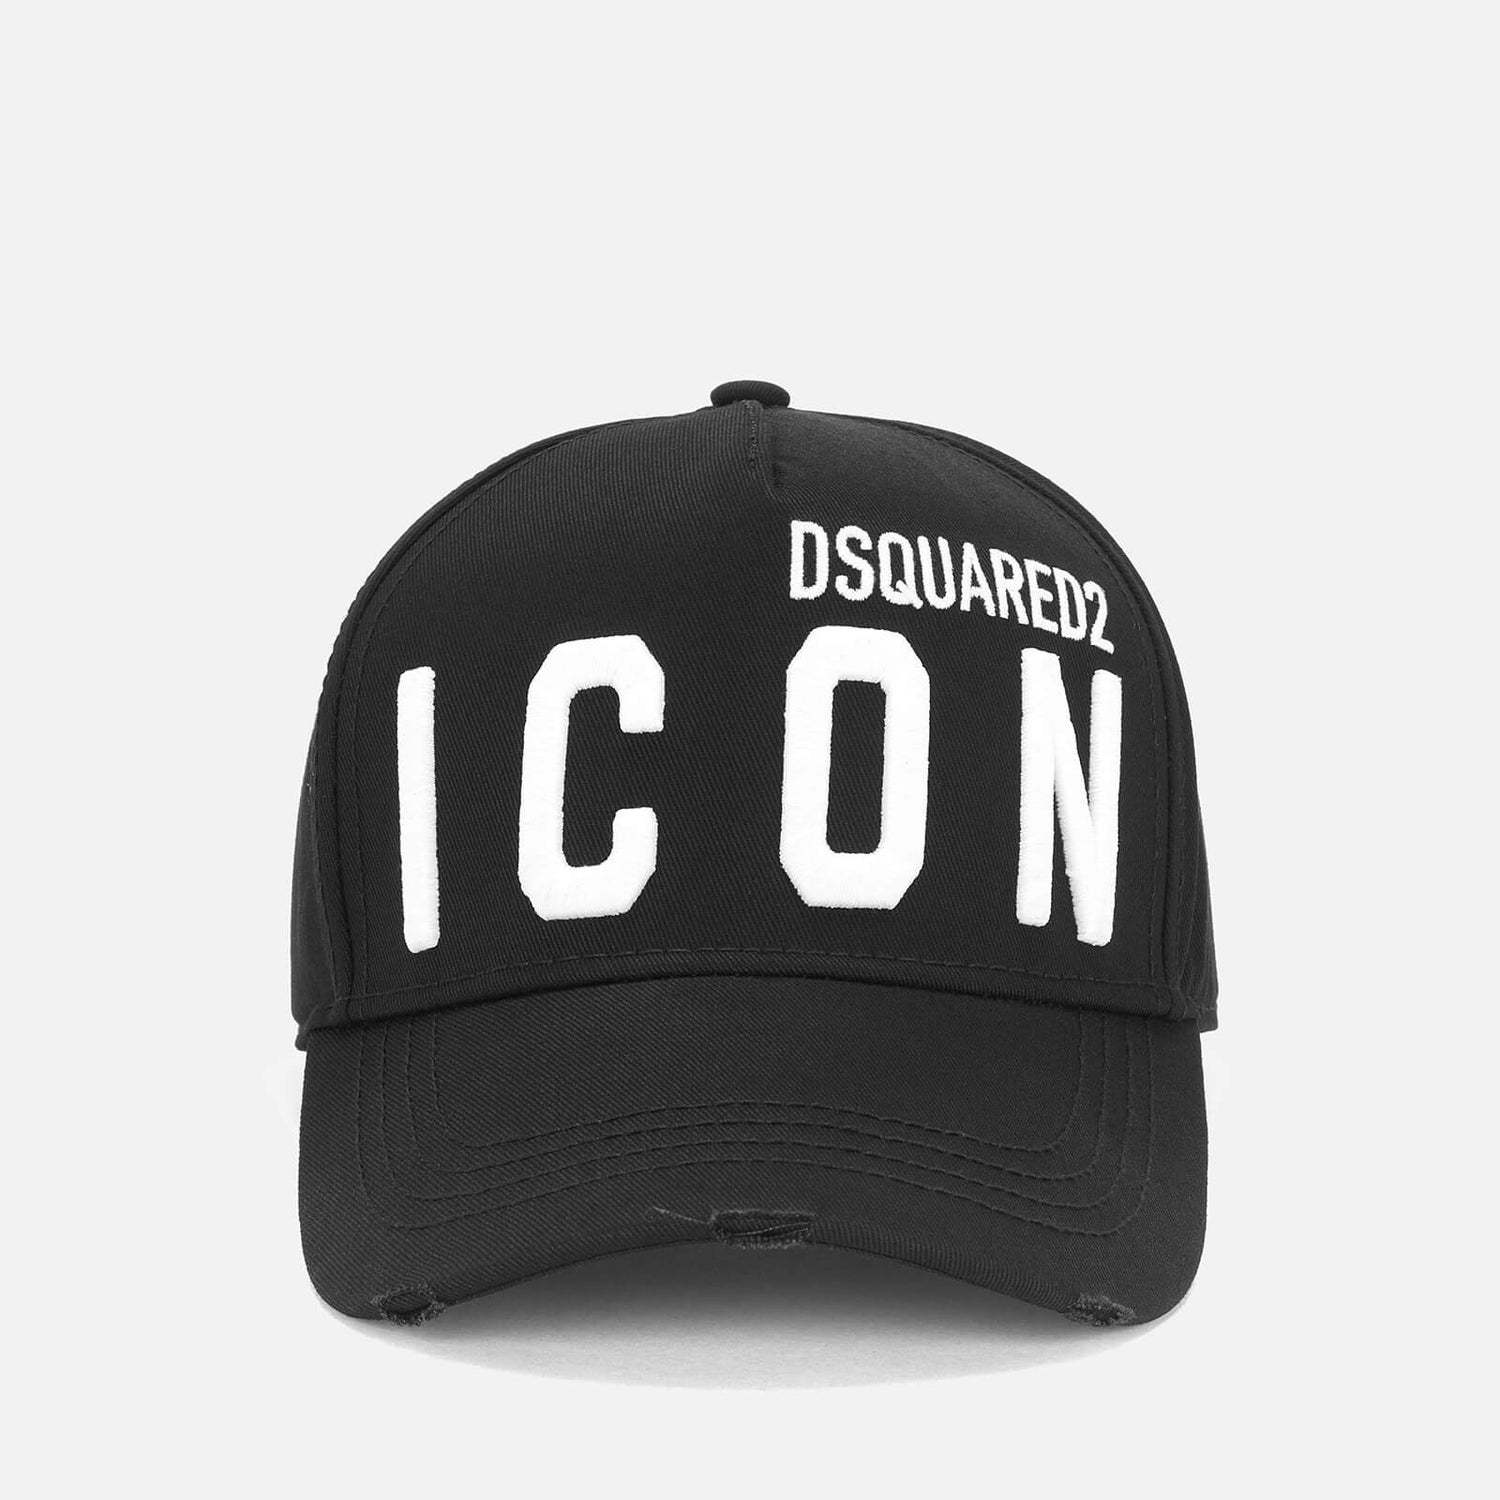 Dsquared2 Men's D2 Icon Baseball Cap - Black/White